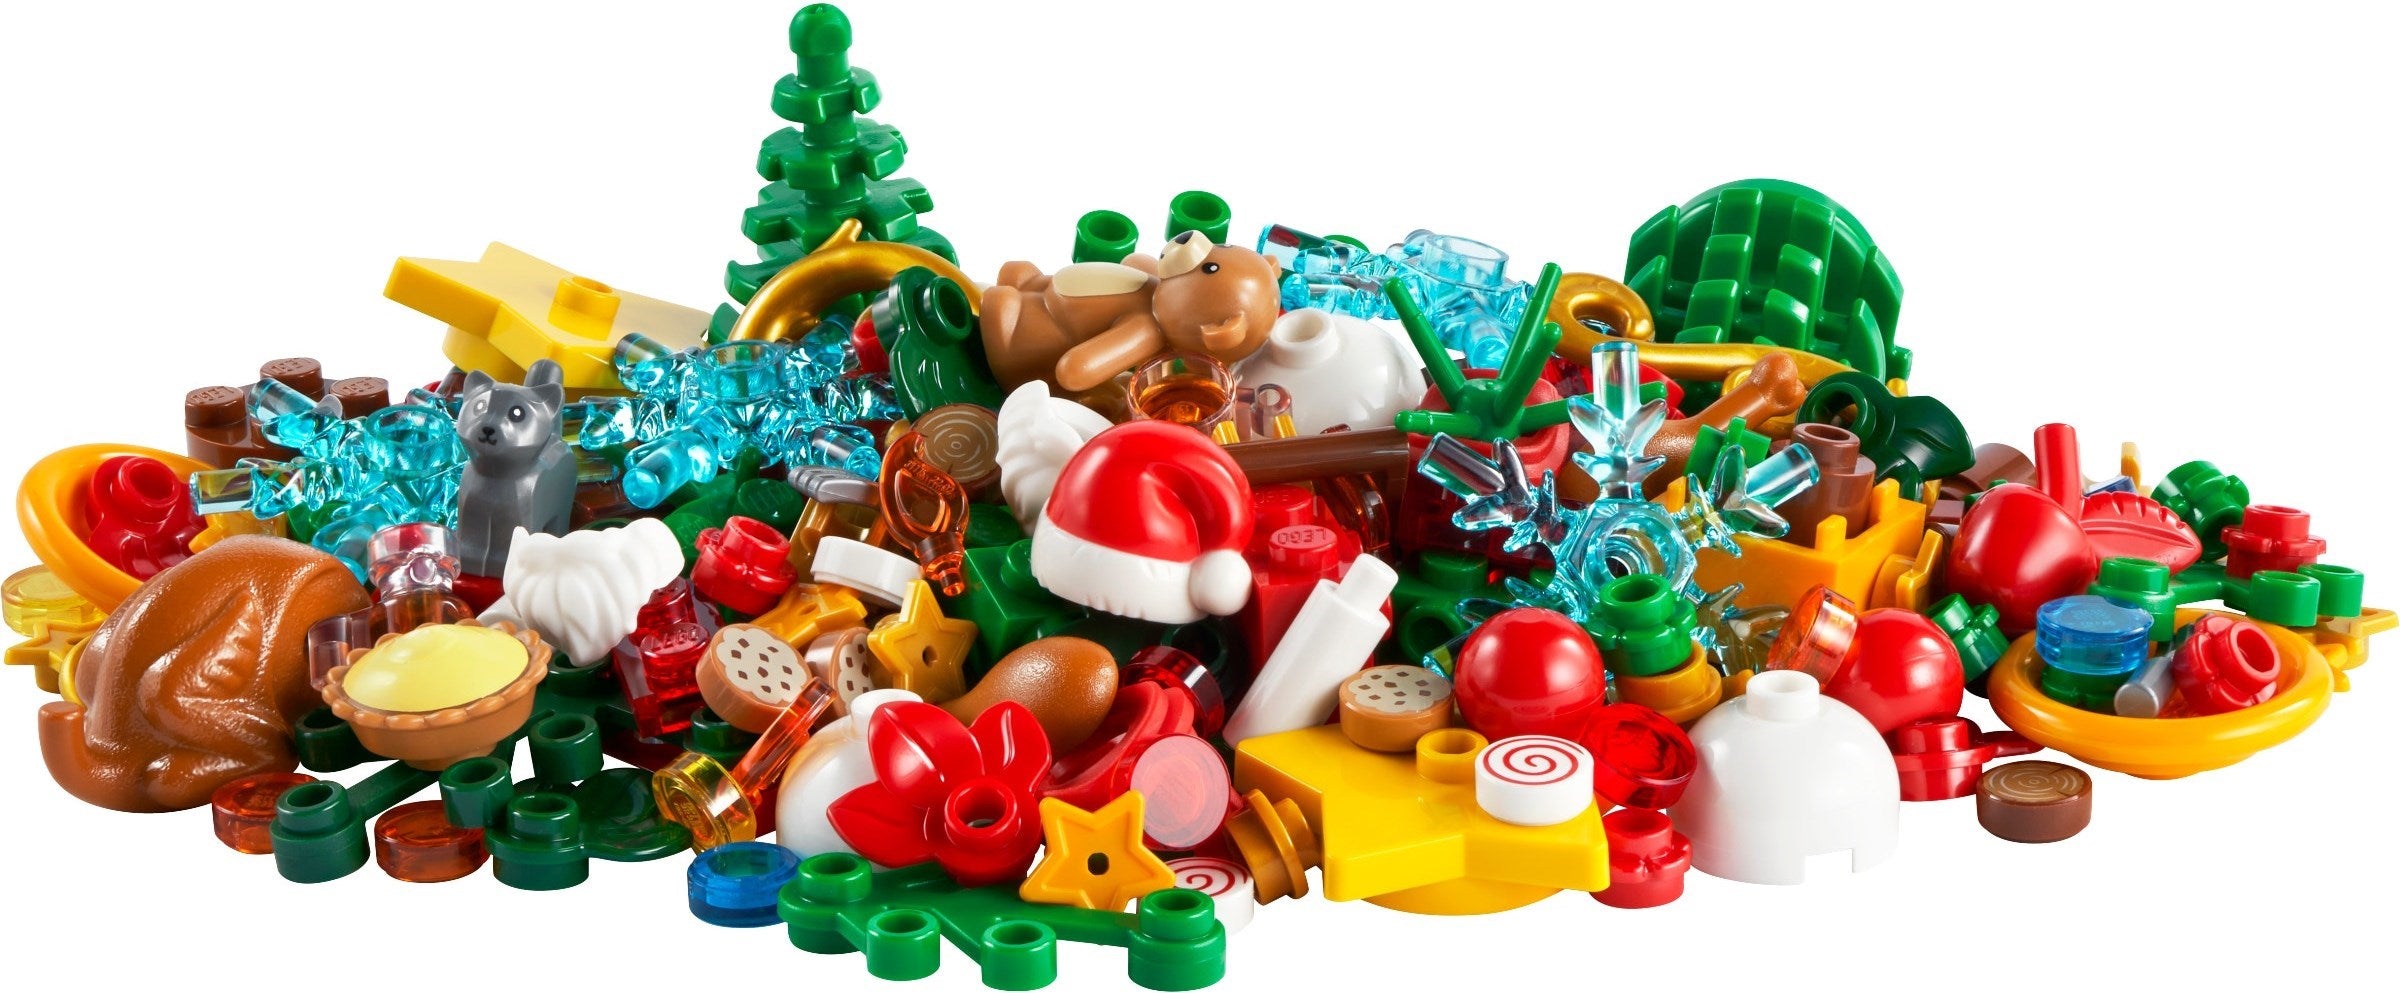 Lego 40609 - Christmas Fun VIP Add-On Pack